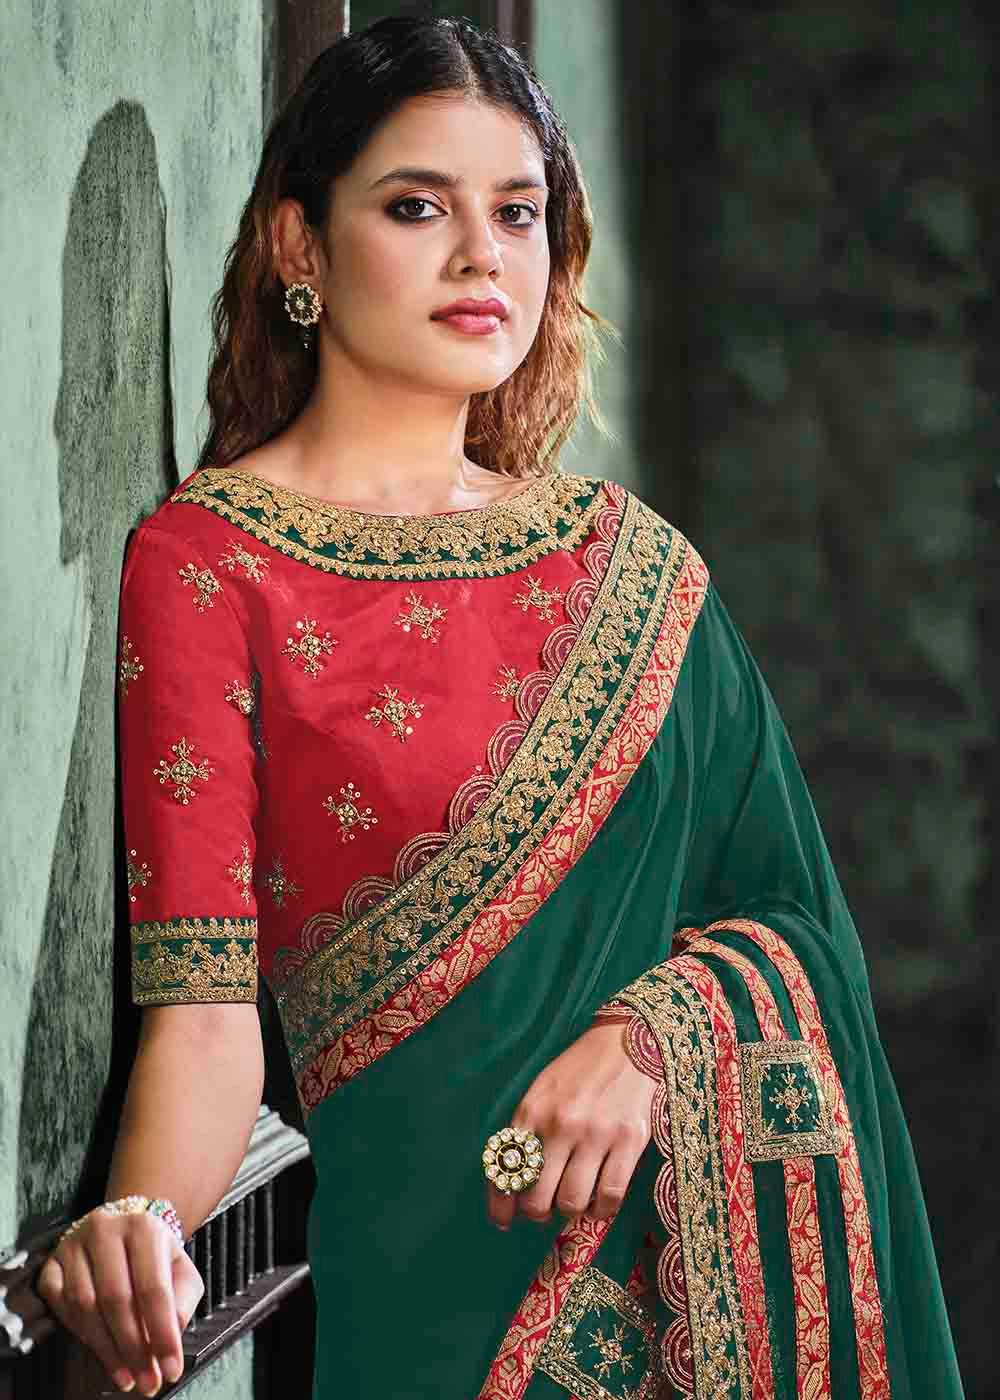 Greenish Blue Satin Silk Saree with Resham & Cord Embroidery